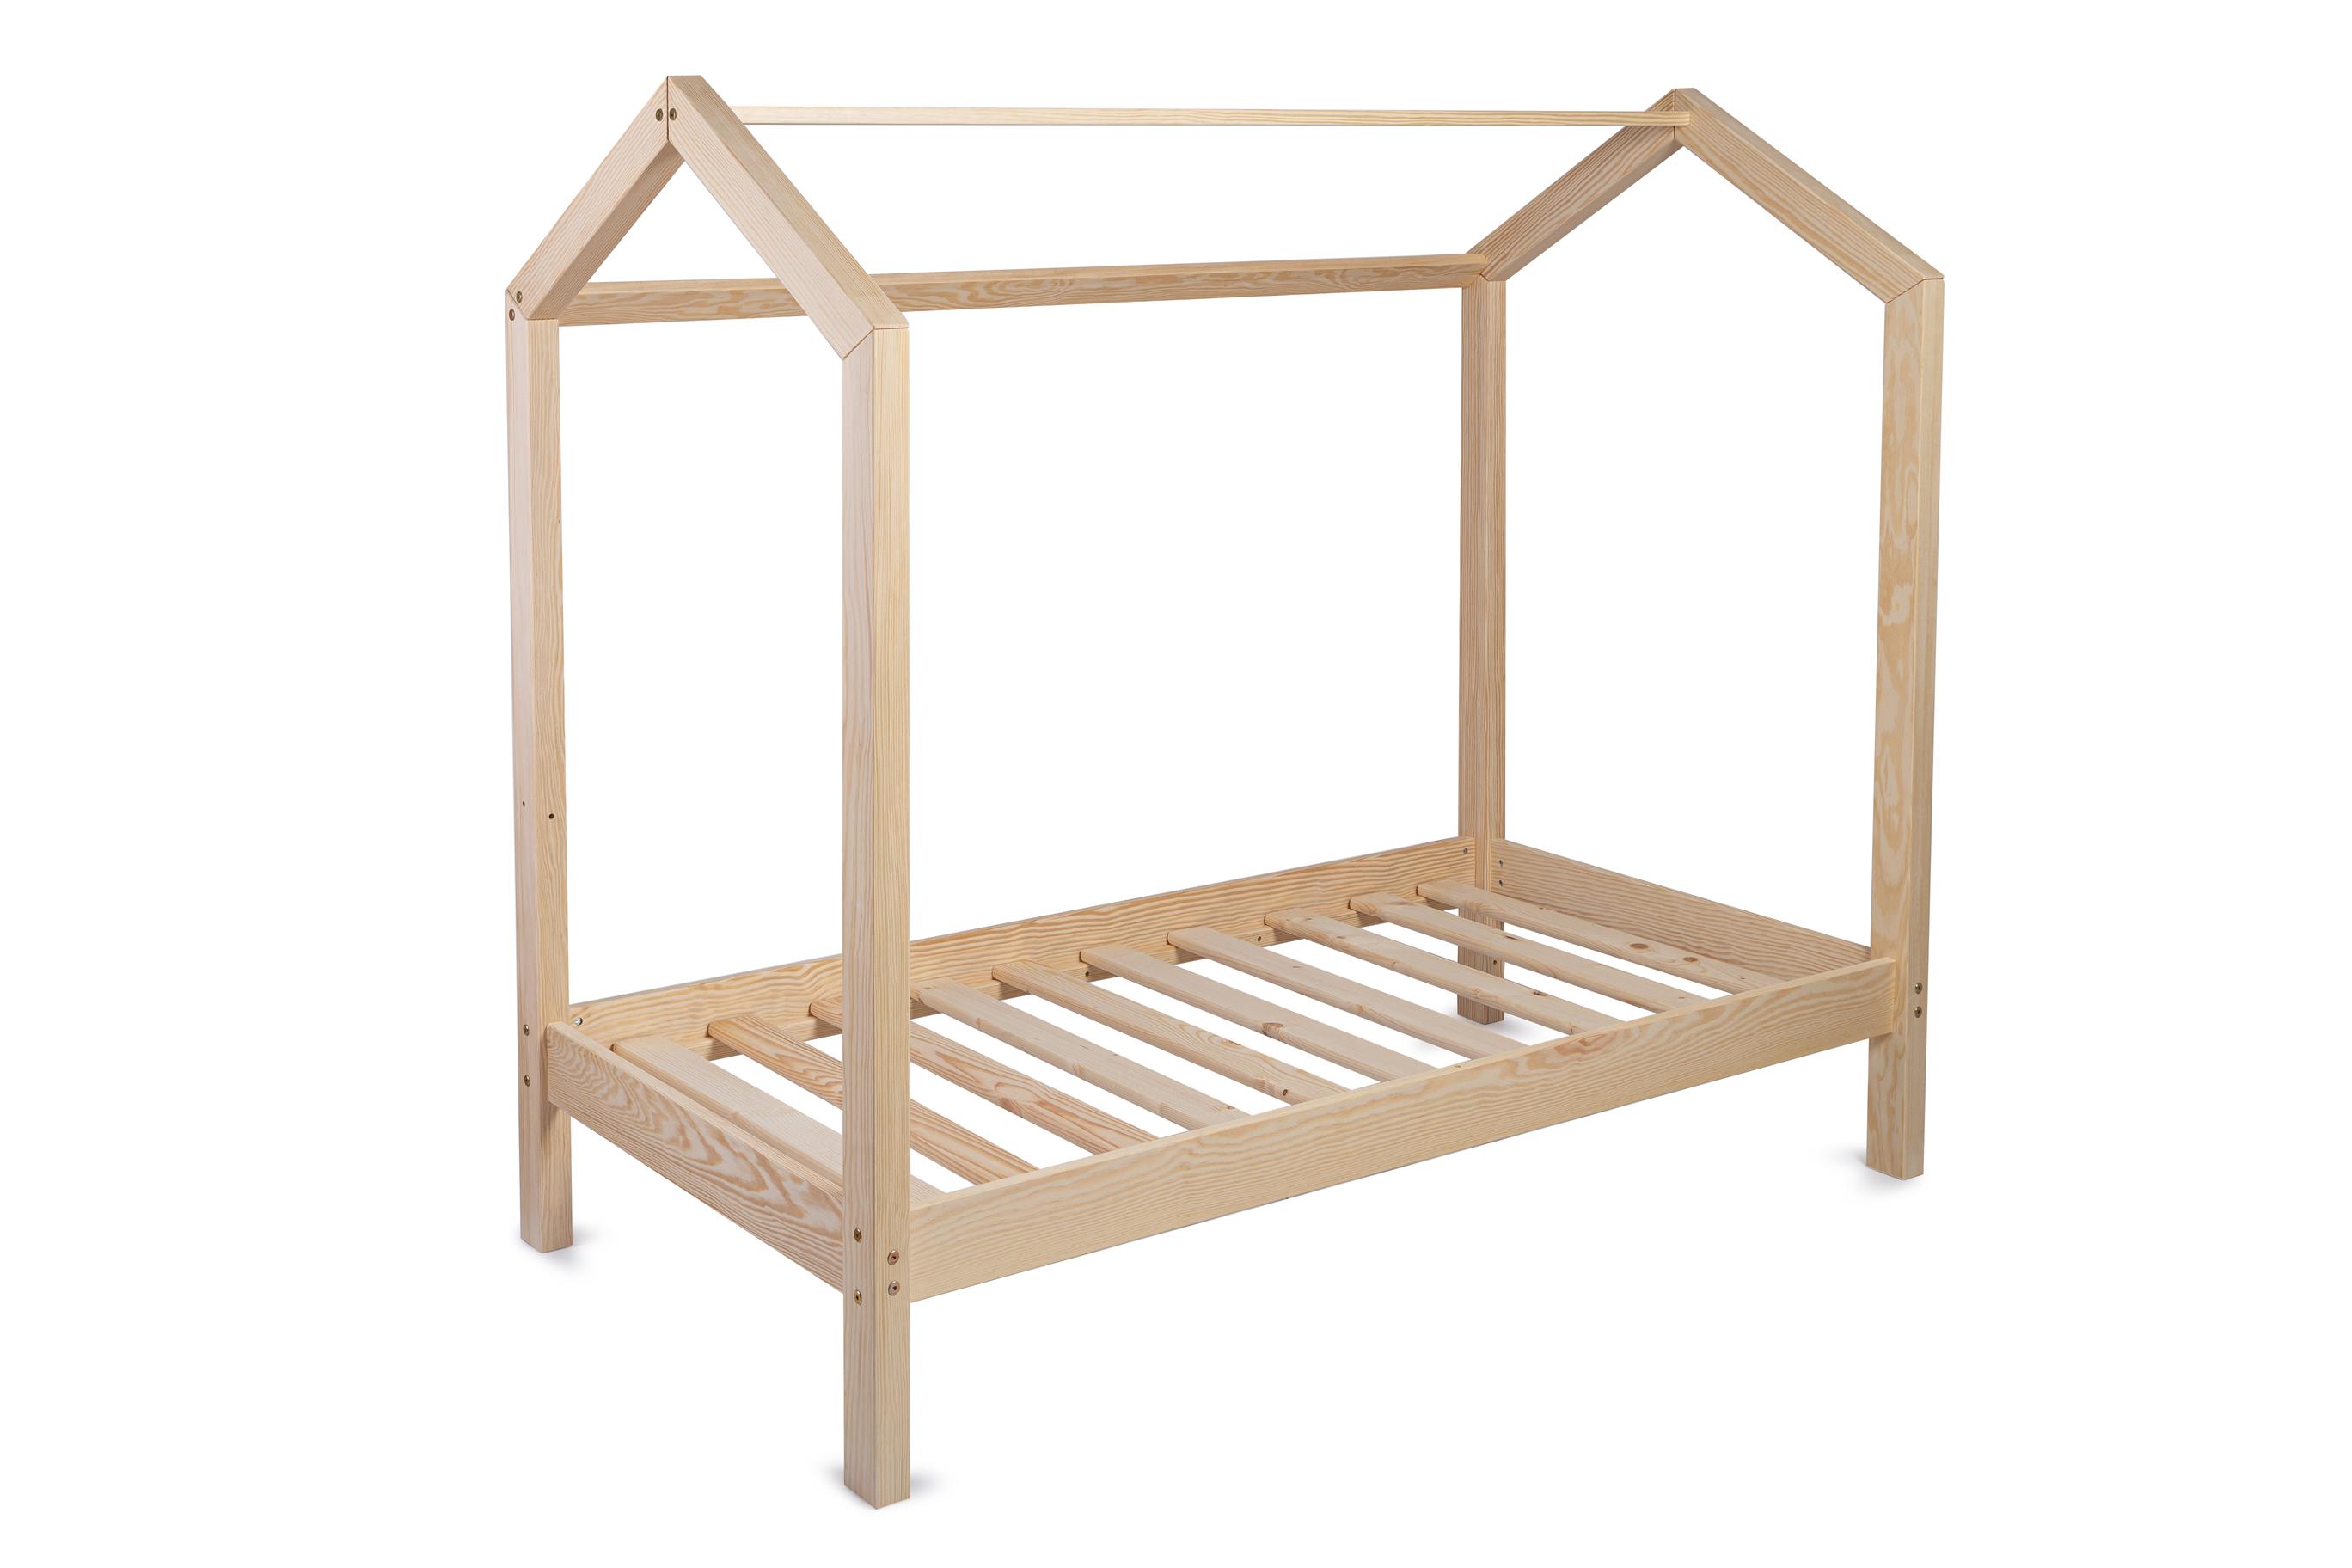 Lit cabane en bois pour enfant avec sommier - solide et robuste